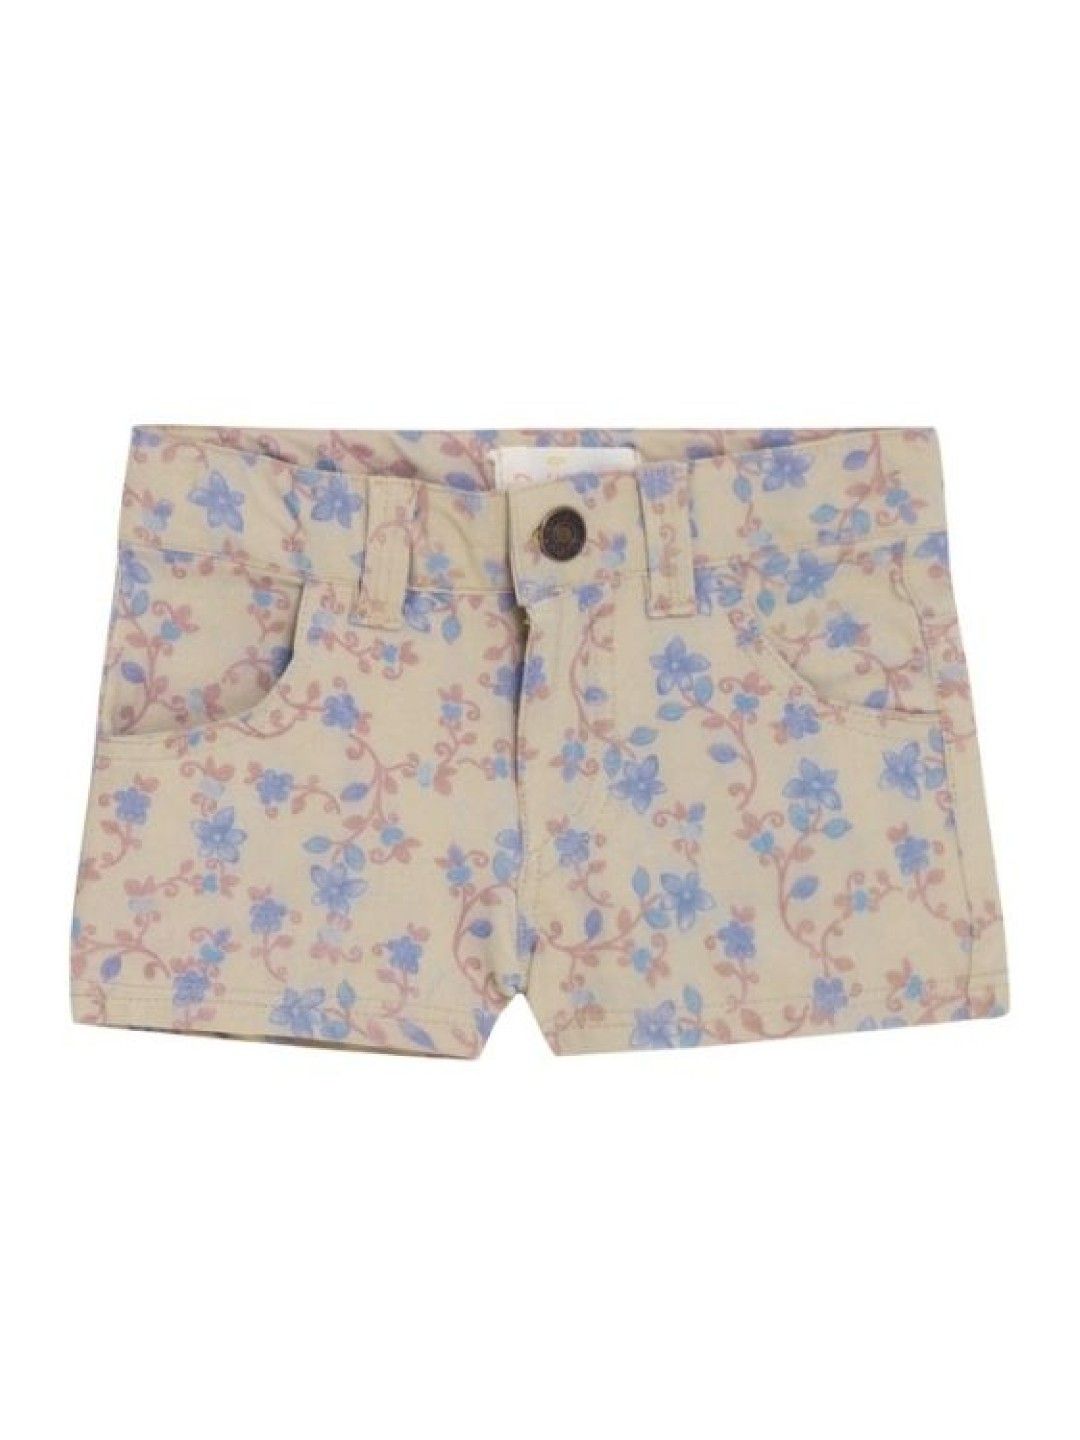 Petit l' ange Children's Wear Flower Printed Shorts (Beige- Image 1)